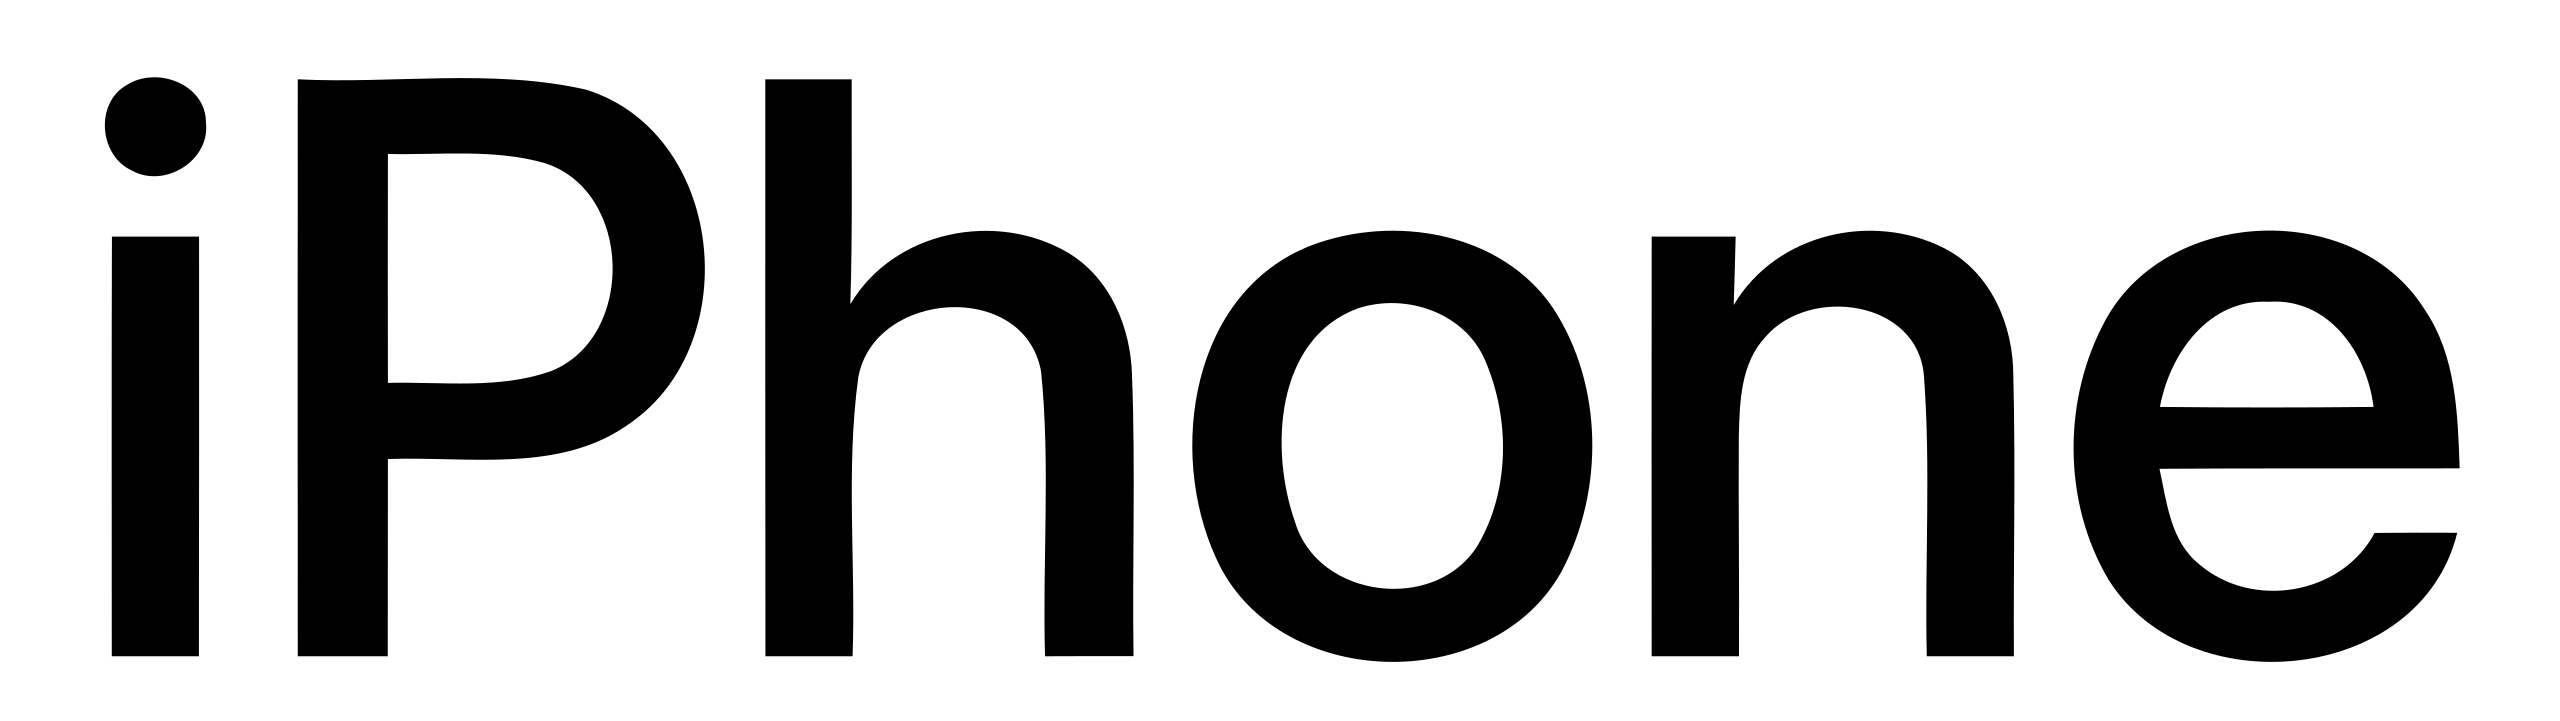 File:IPhone Logo 2016.svg - Wikipedia